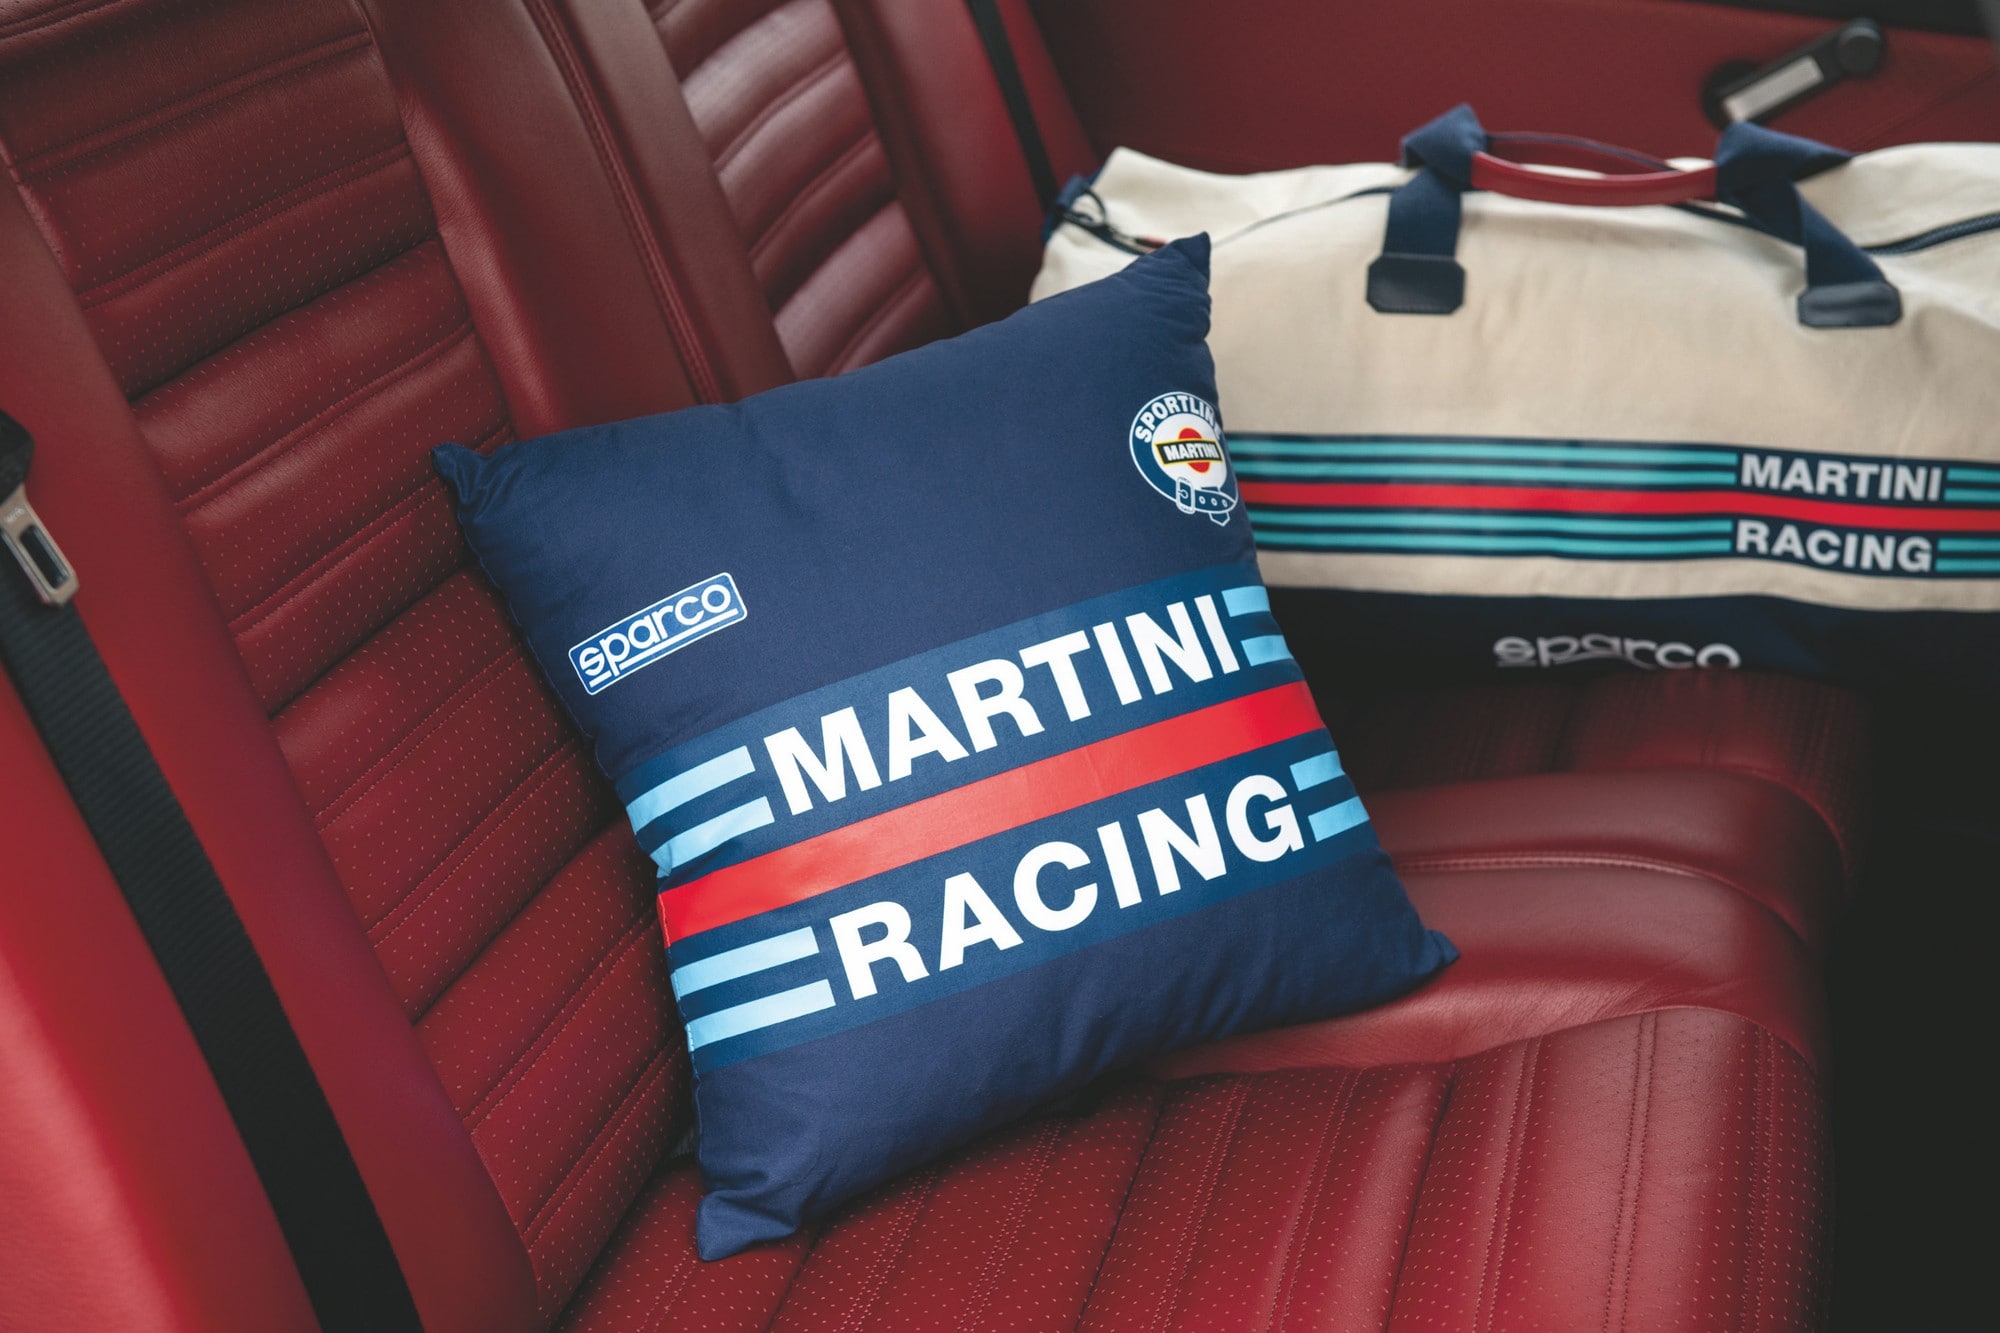 Kudde Sparco Martini Racing 40x40 Blå